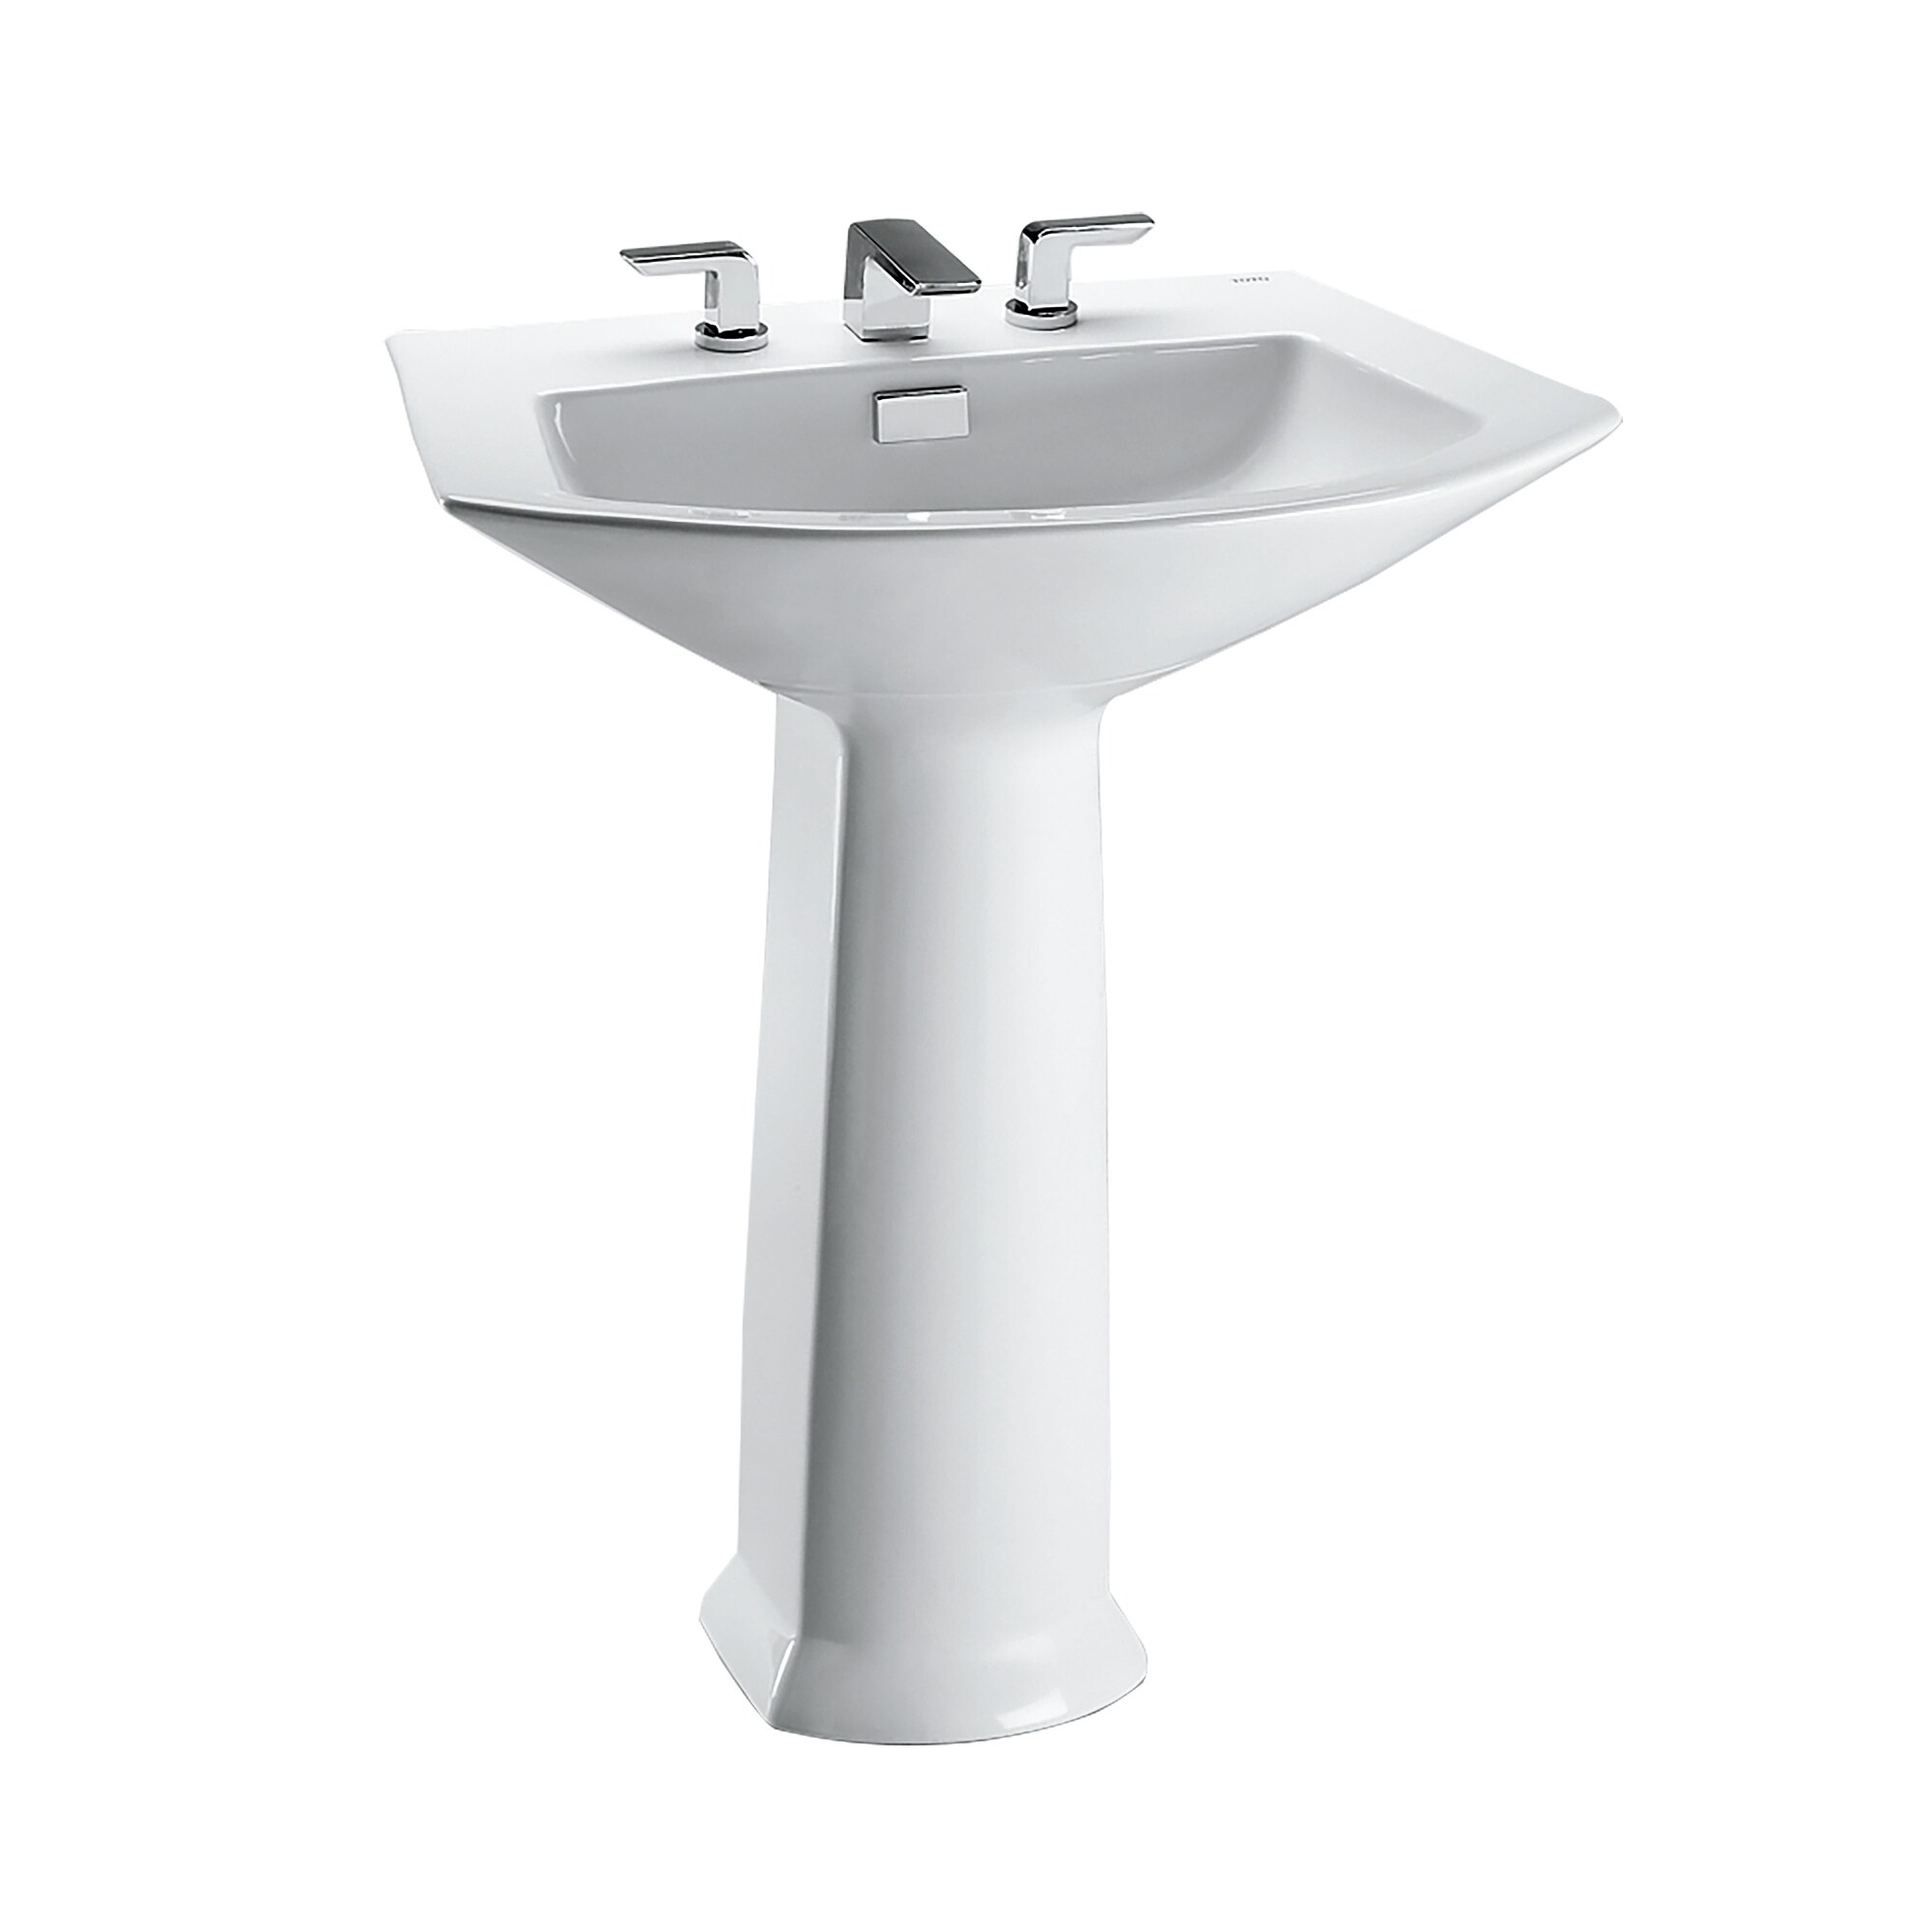 Toto Soire 25 1 8 X 18 7 8 Arched Front Rectangular Pedestal Bathroom Sink